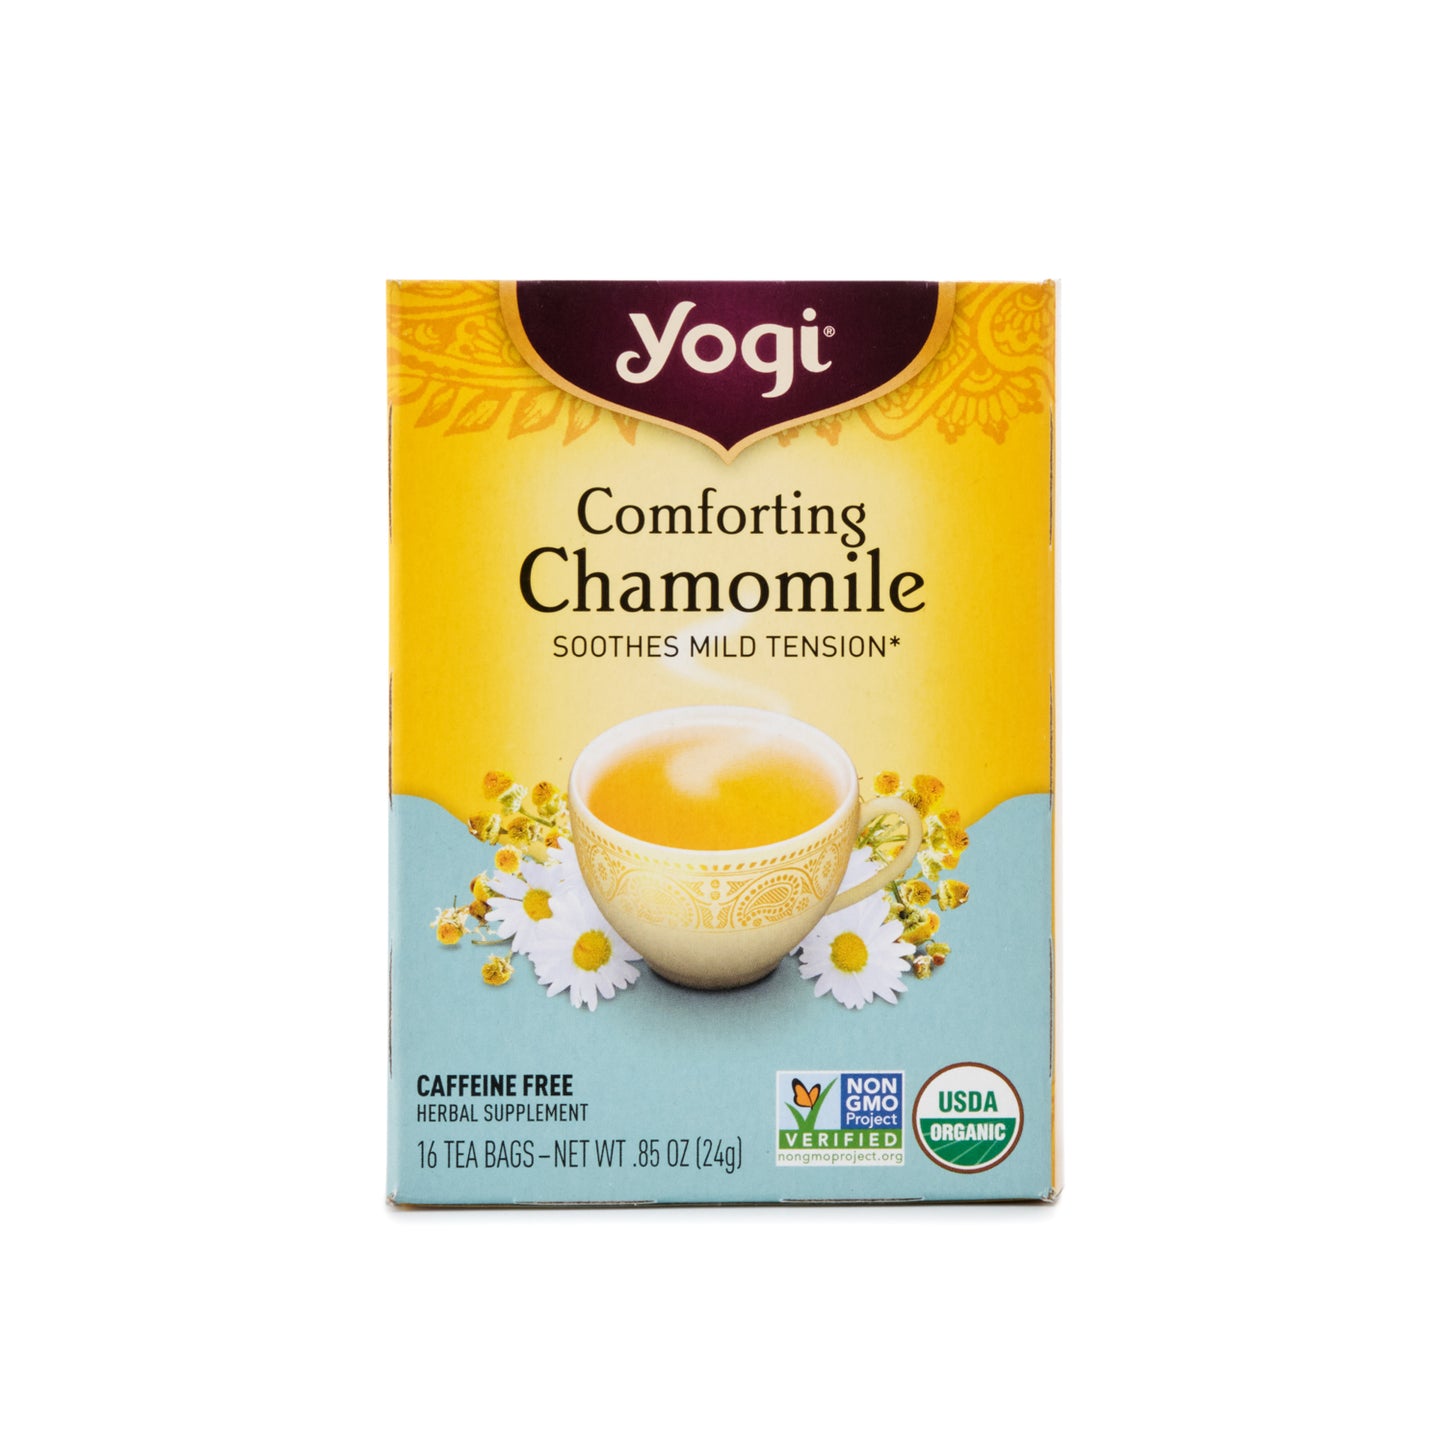 Yogi Organic Comforting Chamomile 16 tea bags